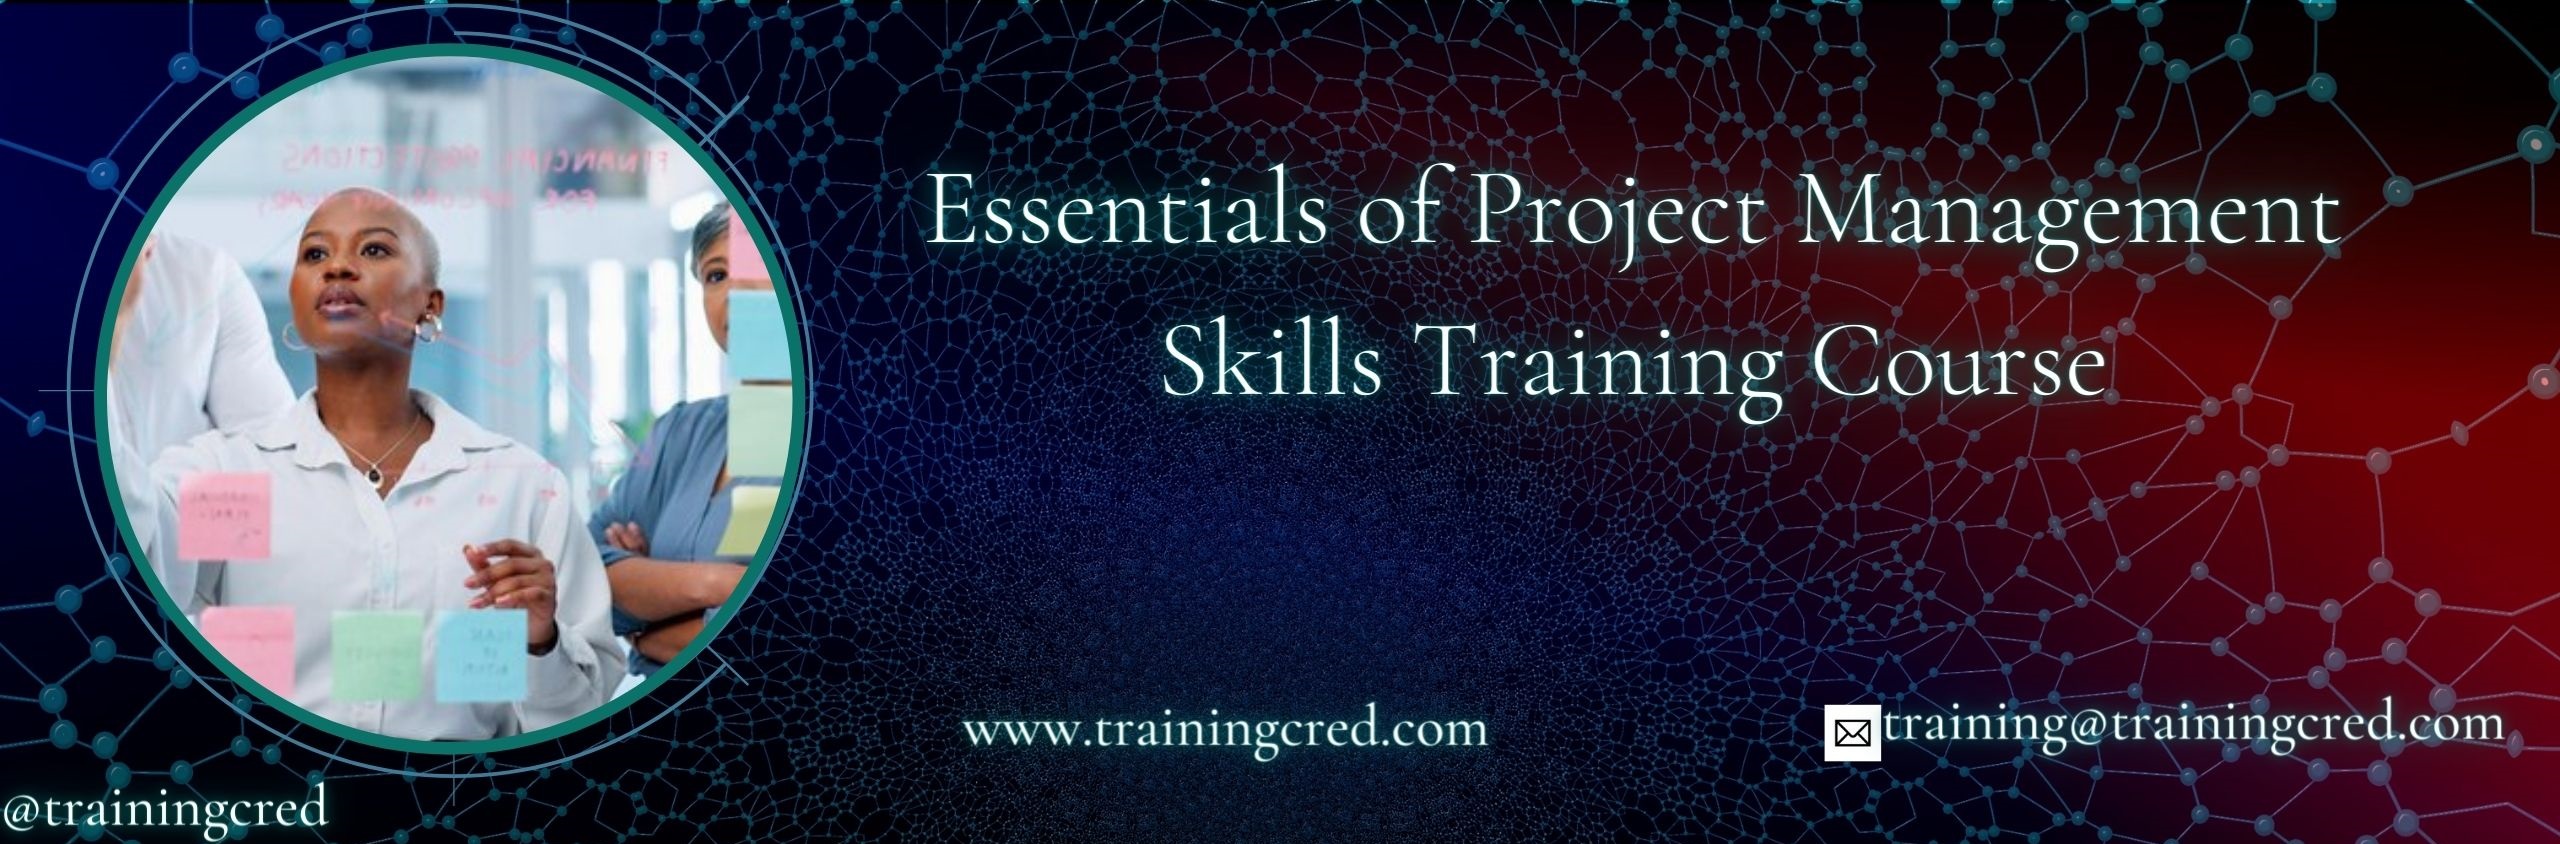 Essentials of Project Management Skills Training